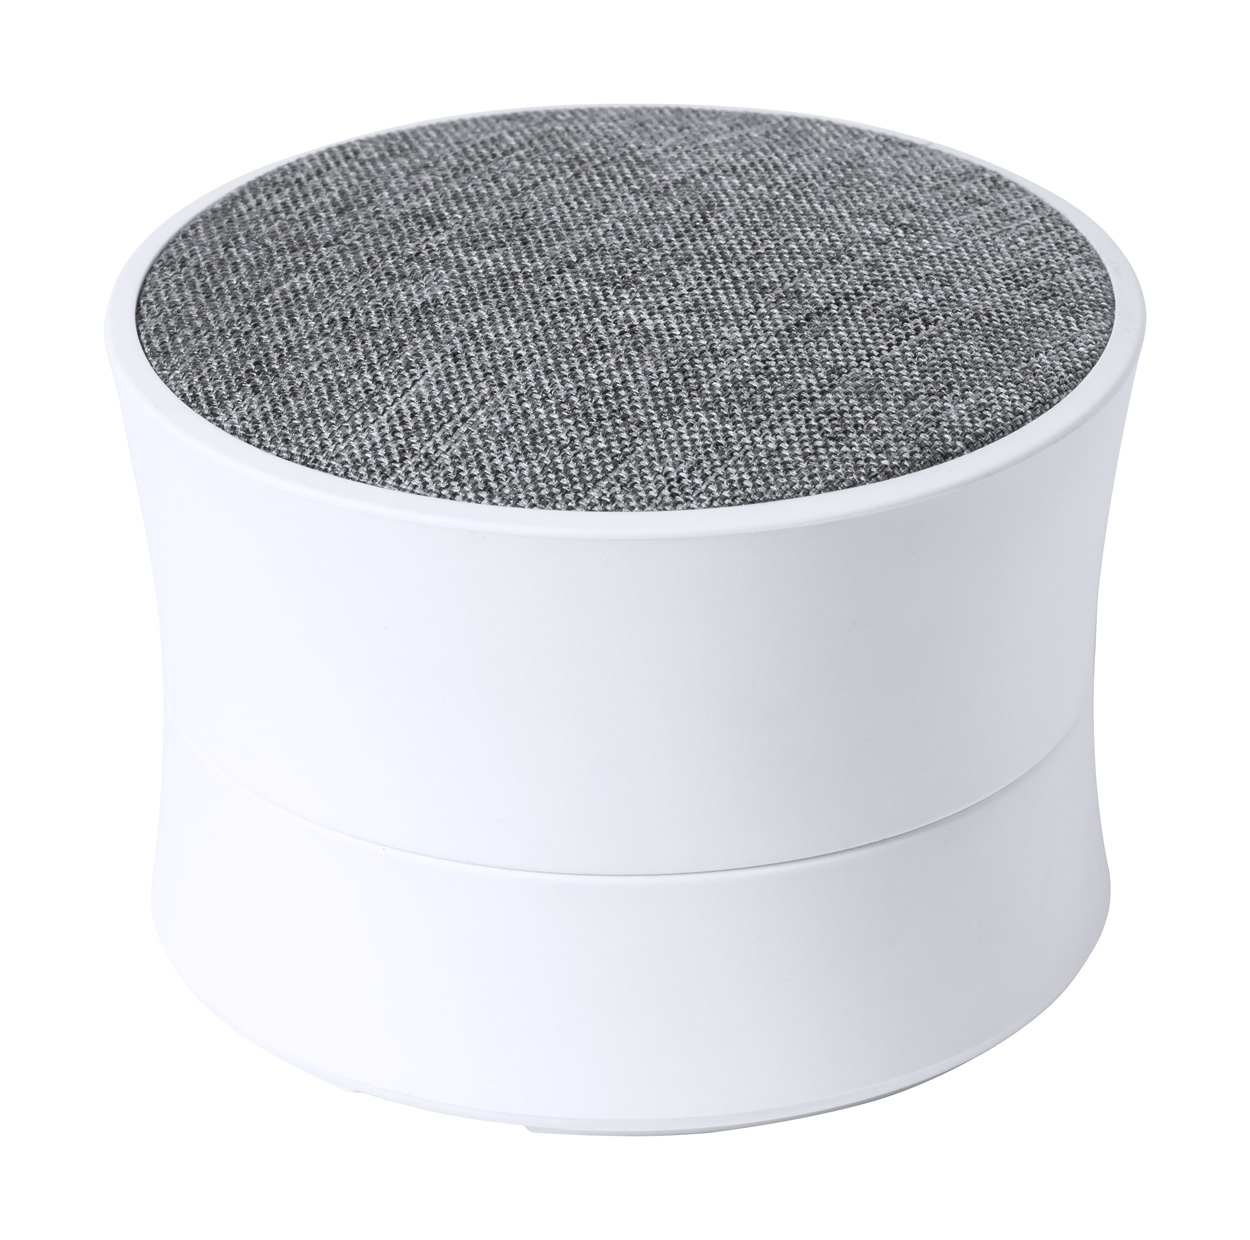 Rumok bluetooth speaker - grey